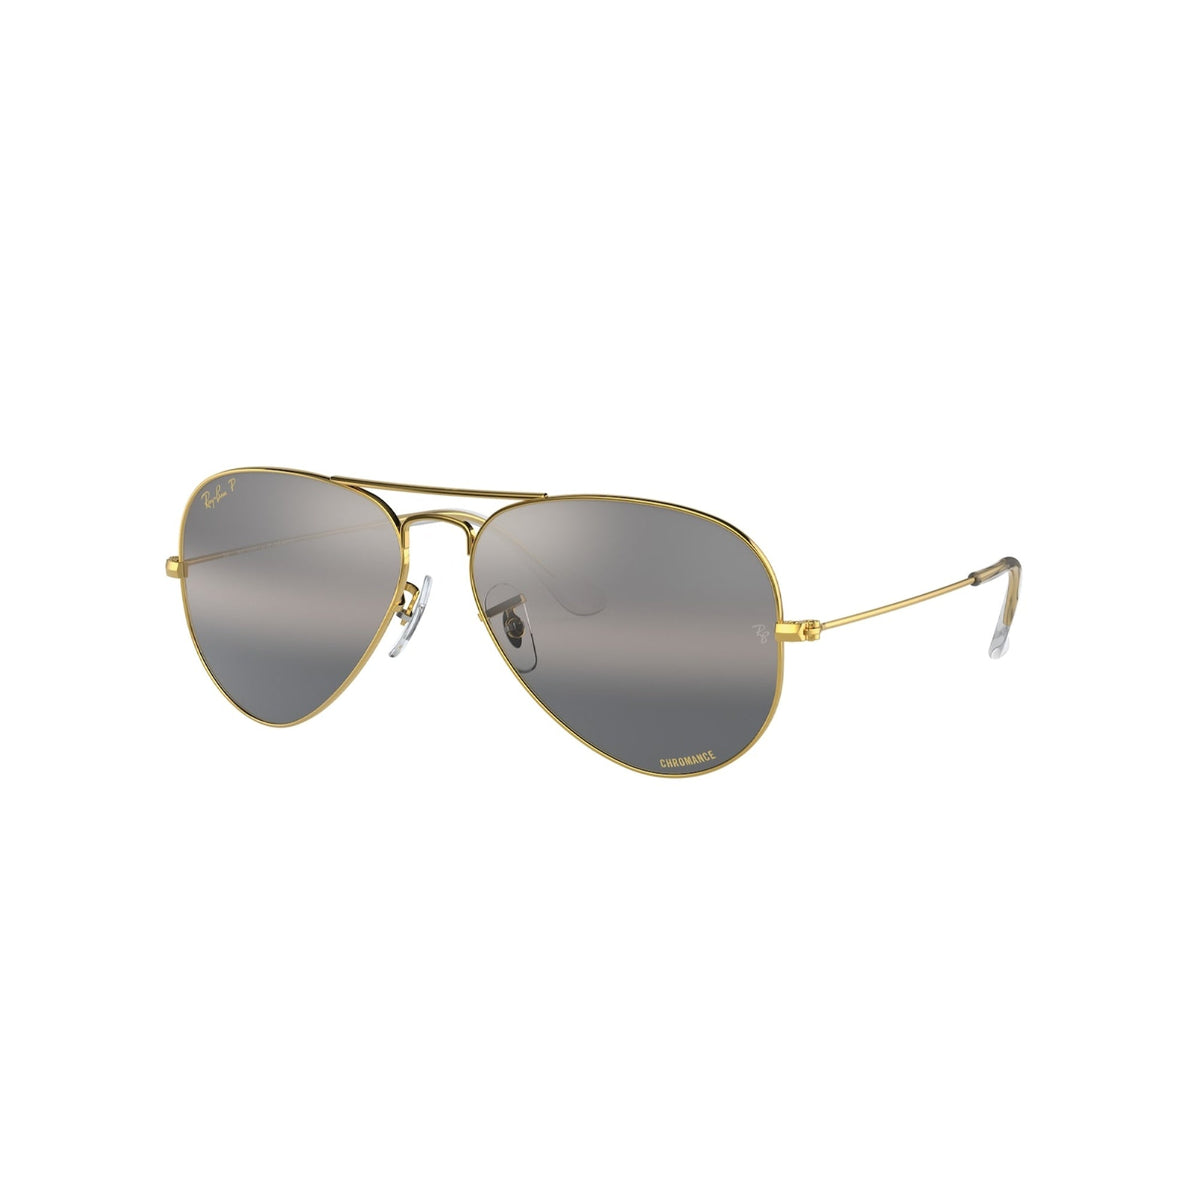 Ray-Ban Unisex Sunglasses Aviator large Metal Gold Polar Clear Gradient Dark Grey Metal Metal  0RB3025 9196G3 62